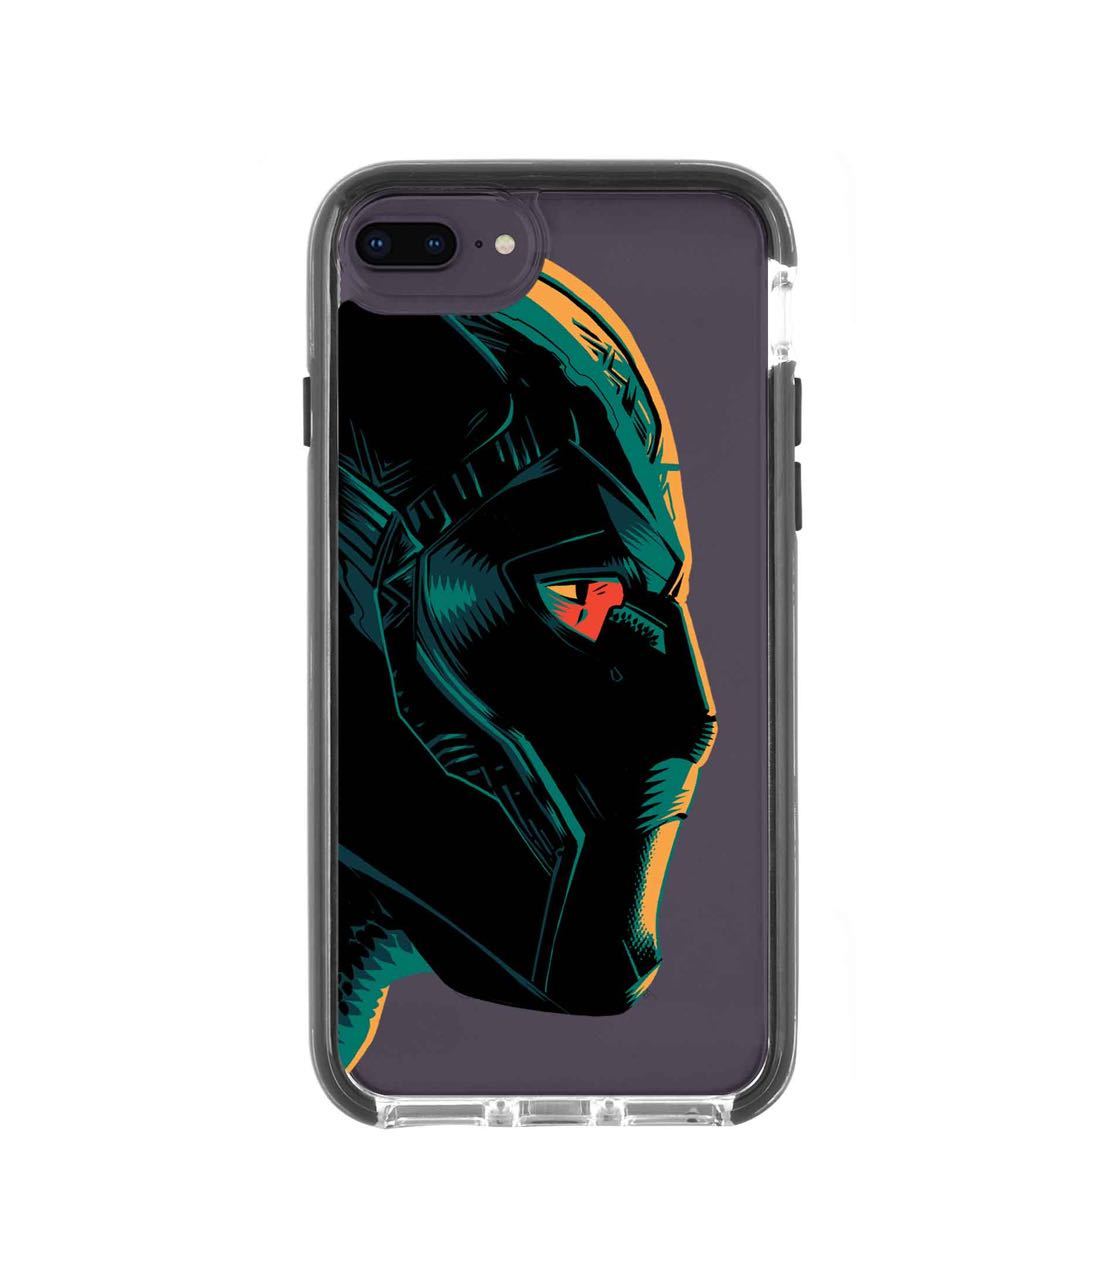 Illuminated Black Panther - Extreme Phone Case for iPhone 8 Plus